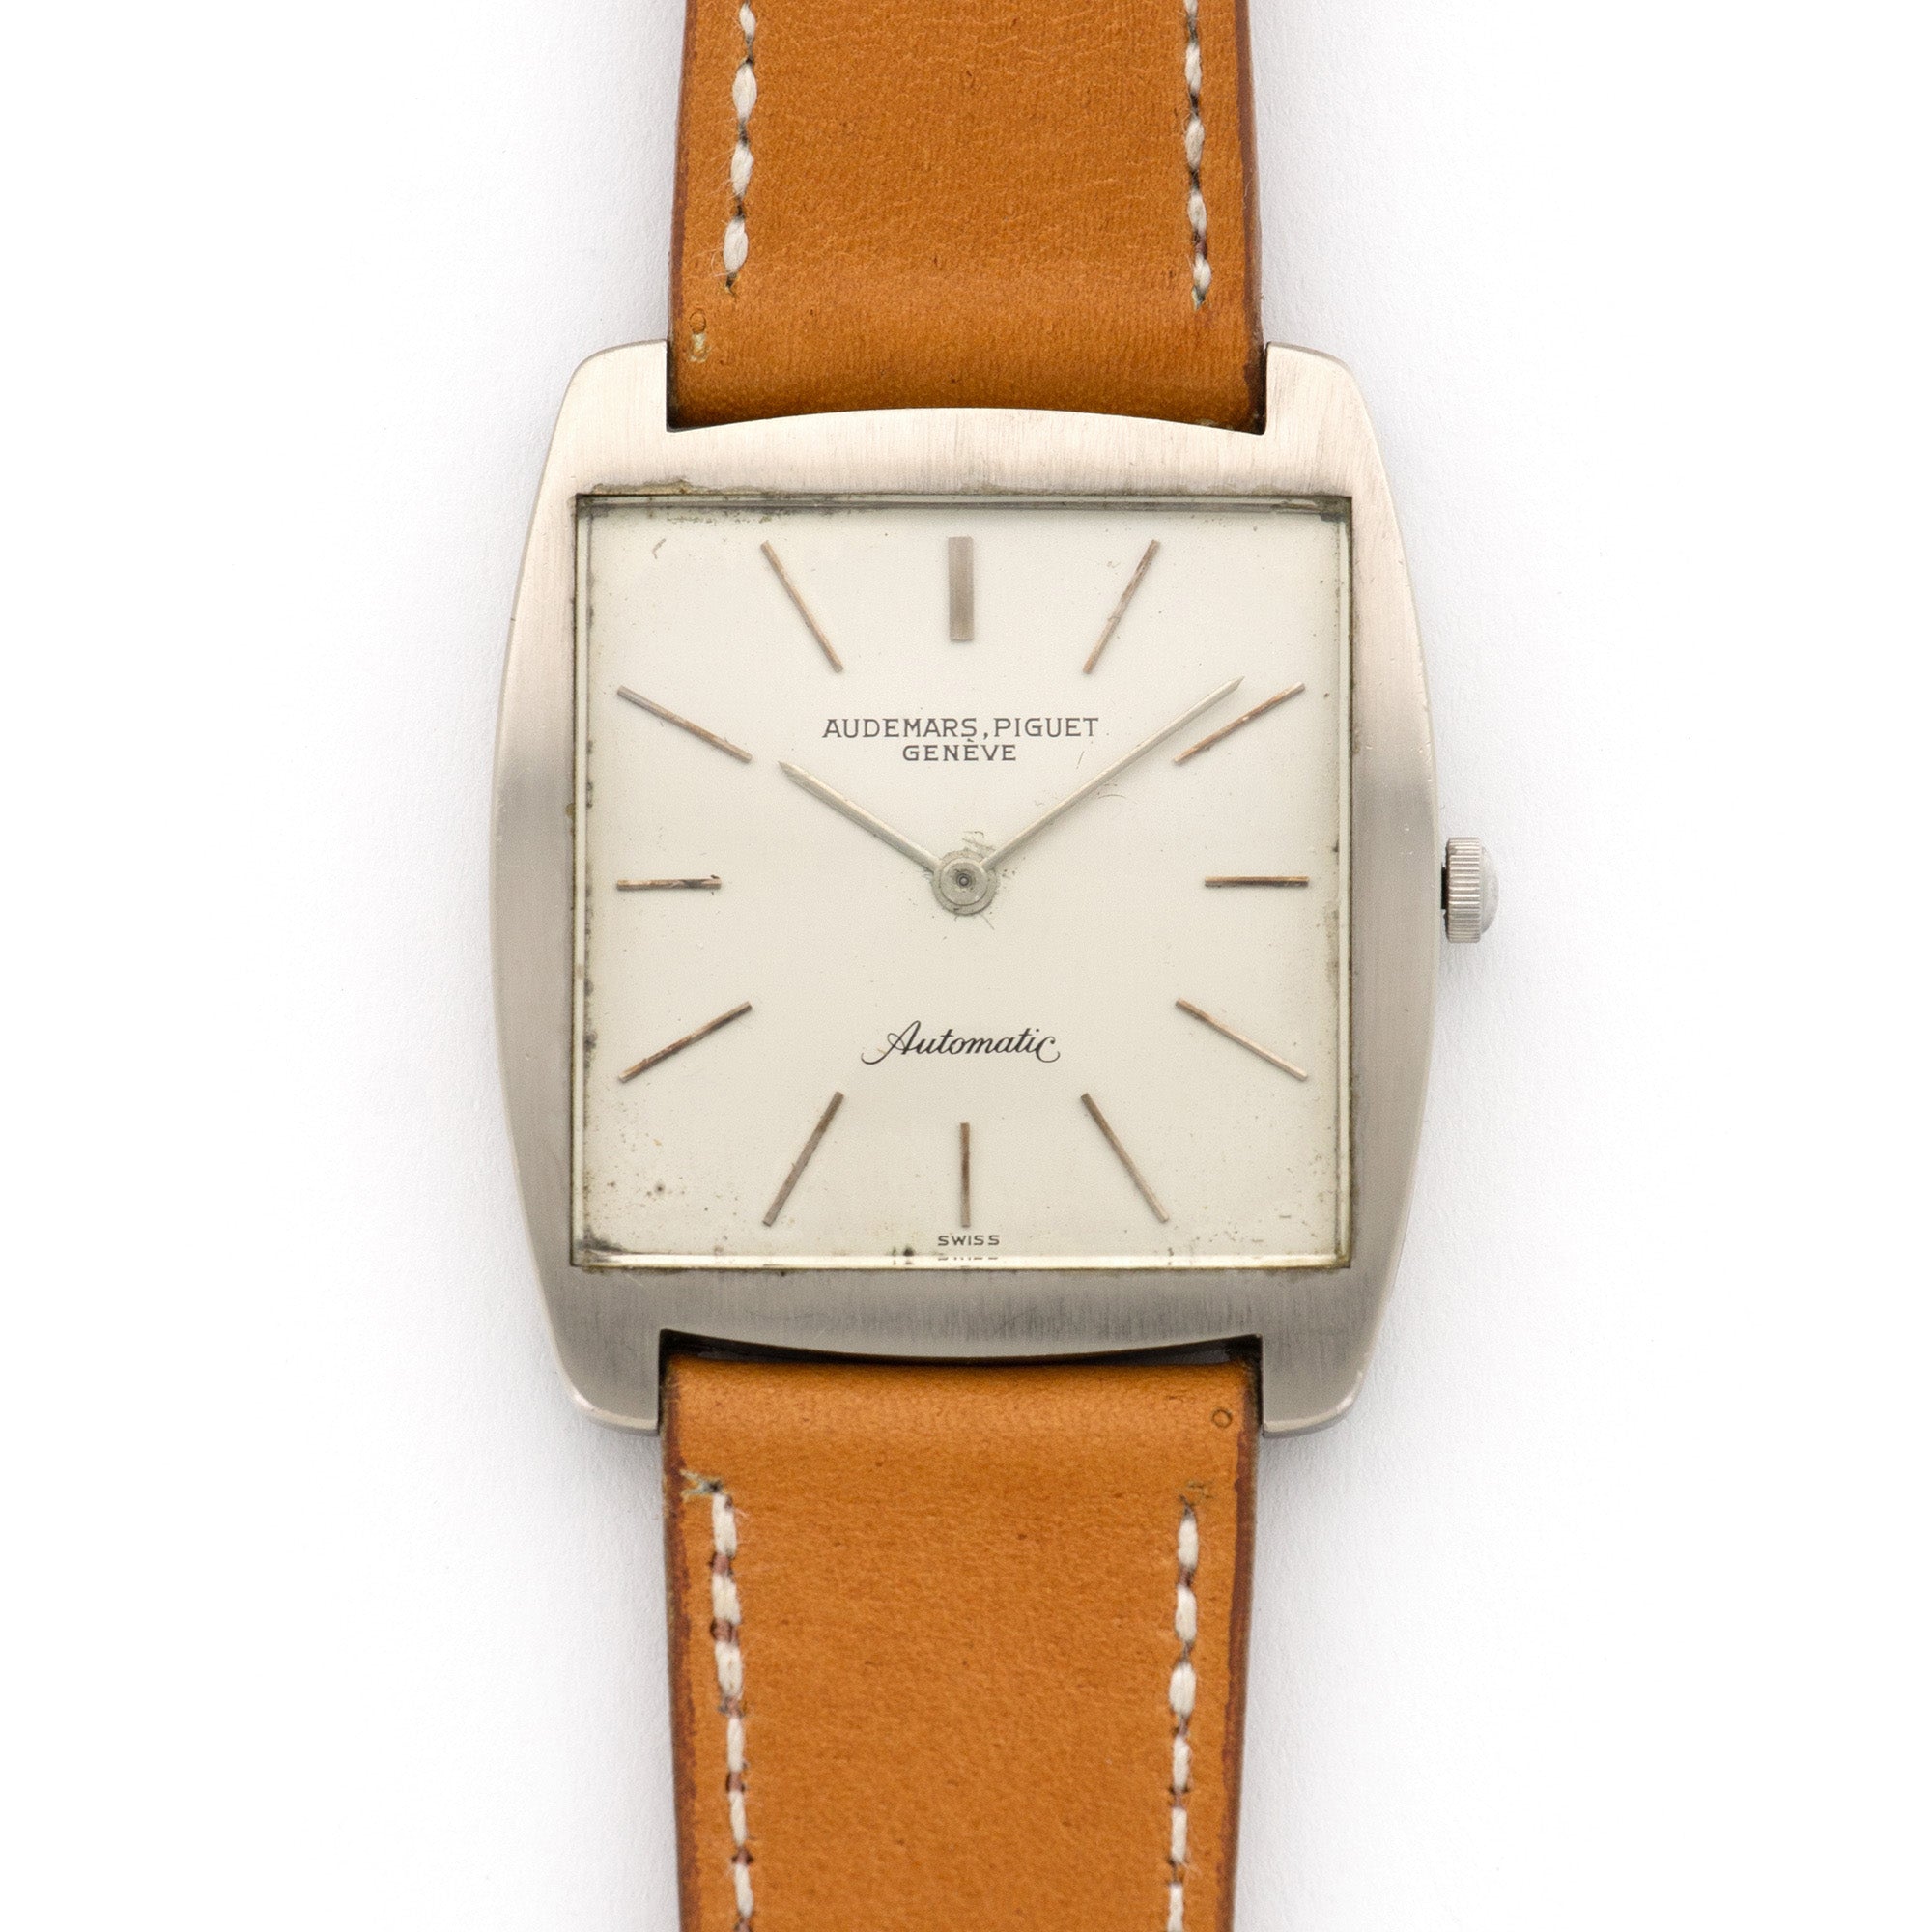 Audemars Piguet - Audemars Piguet White Gold Automatic Watch Ref. 5186 - The Keystone Watches